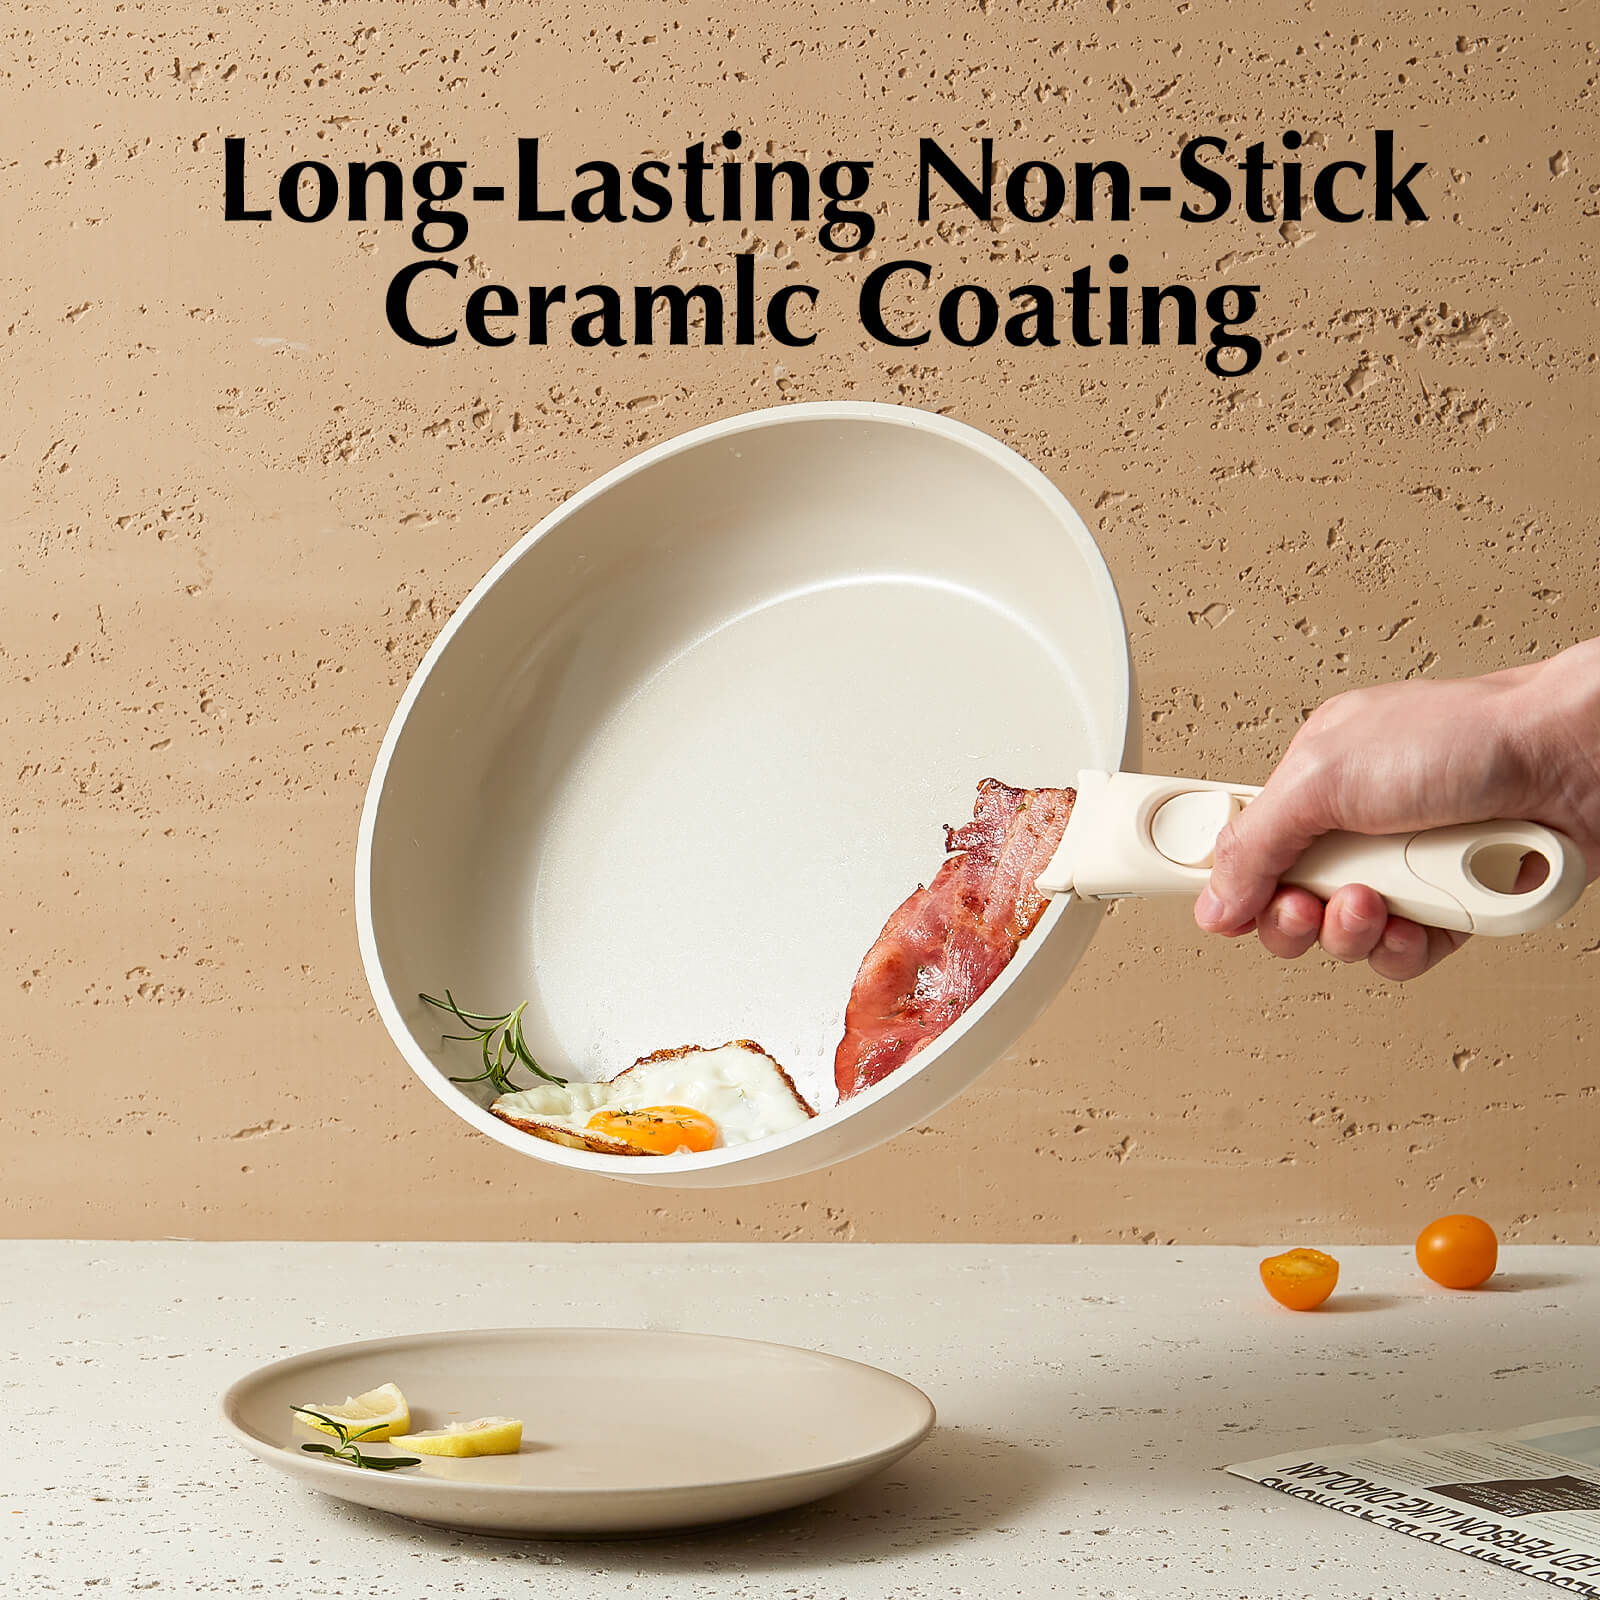 CG INTERNATIONAL TRADING 6 - Piece Non-Stick Ceramic Cookware Set